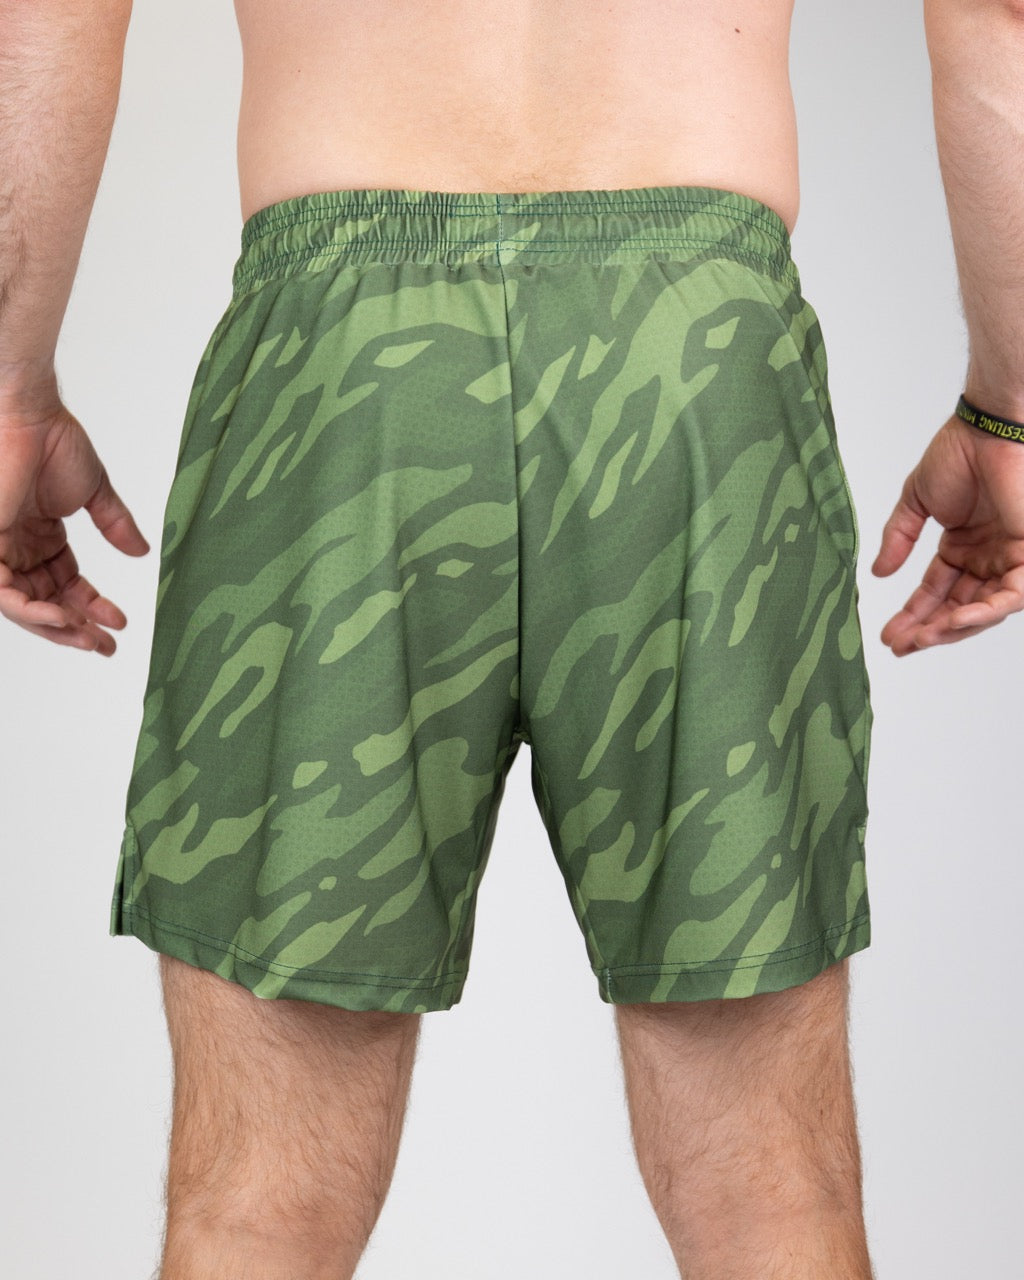 Green Ghost Camo Gym Shorts (5"&7" Inseam)